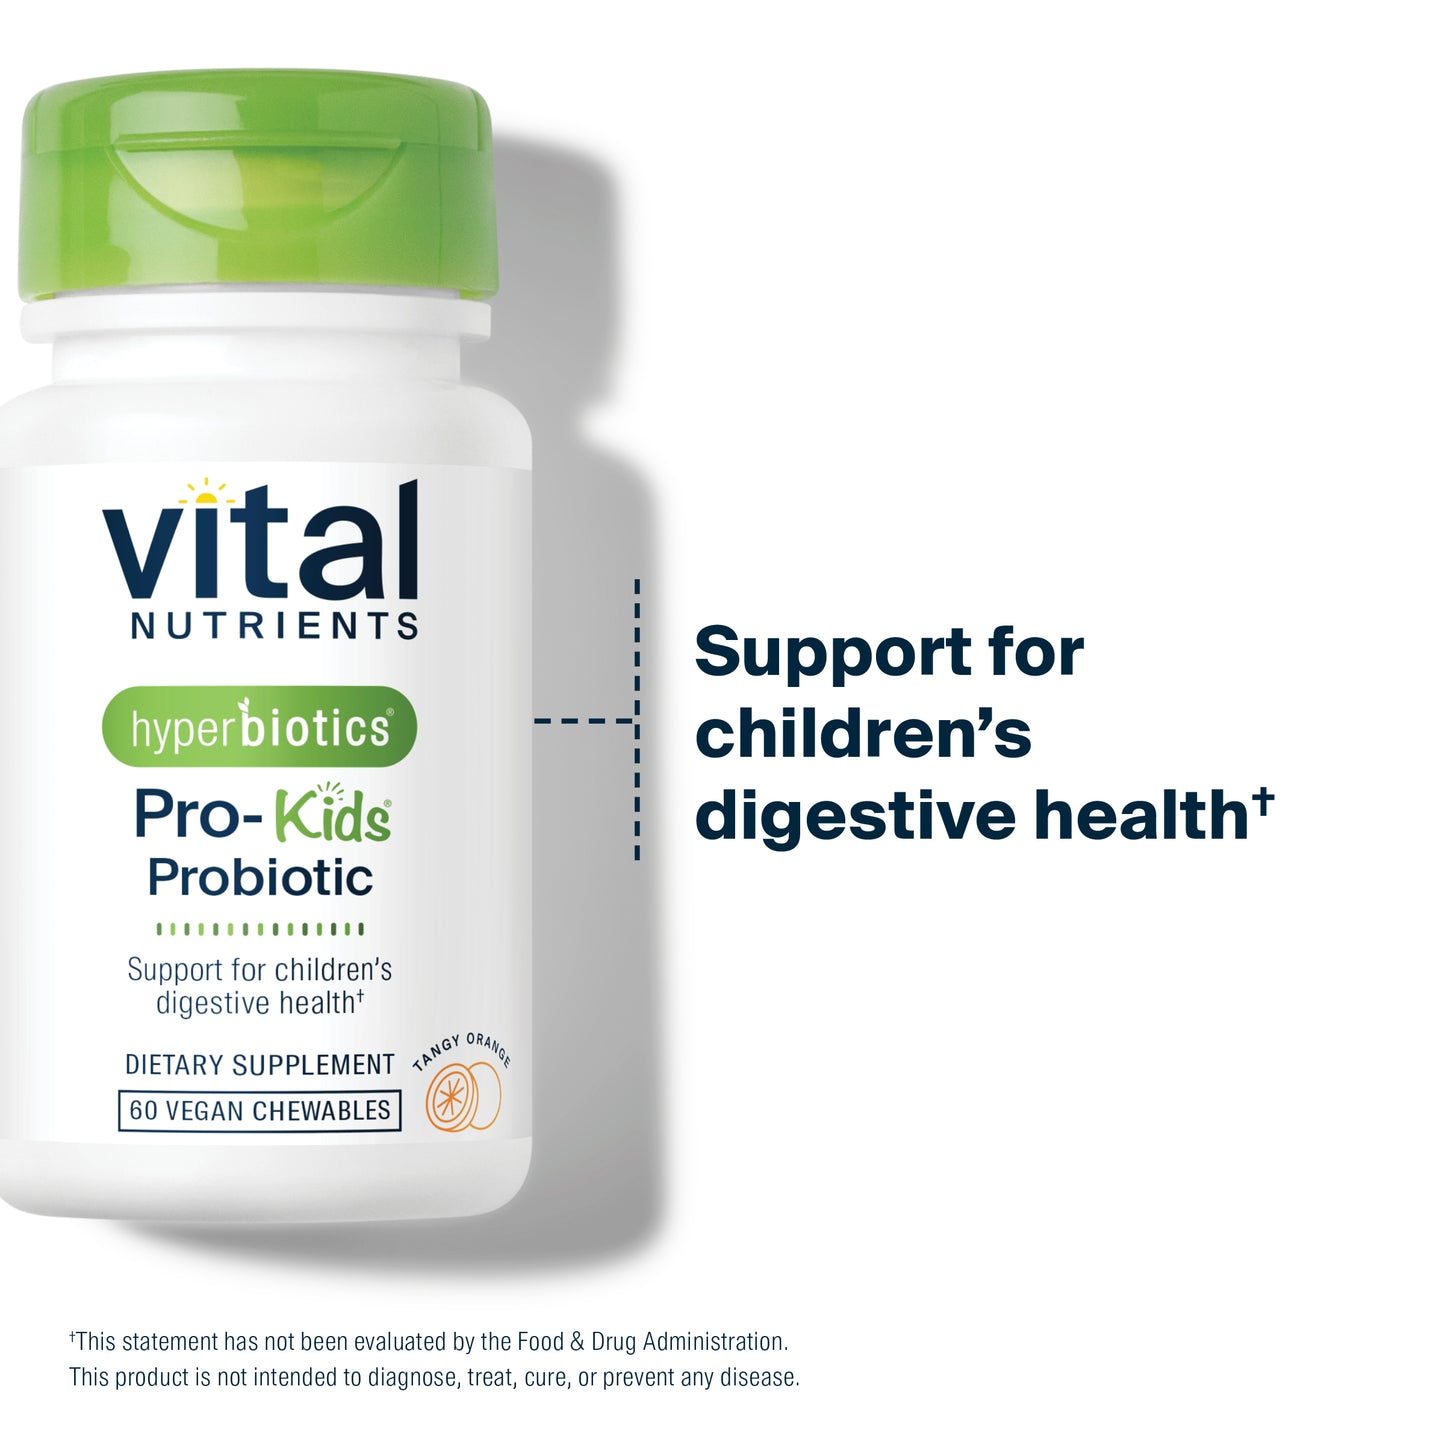 Hyperbiotics Pro-Kids Probiotic support for children's digestive health.*